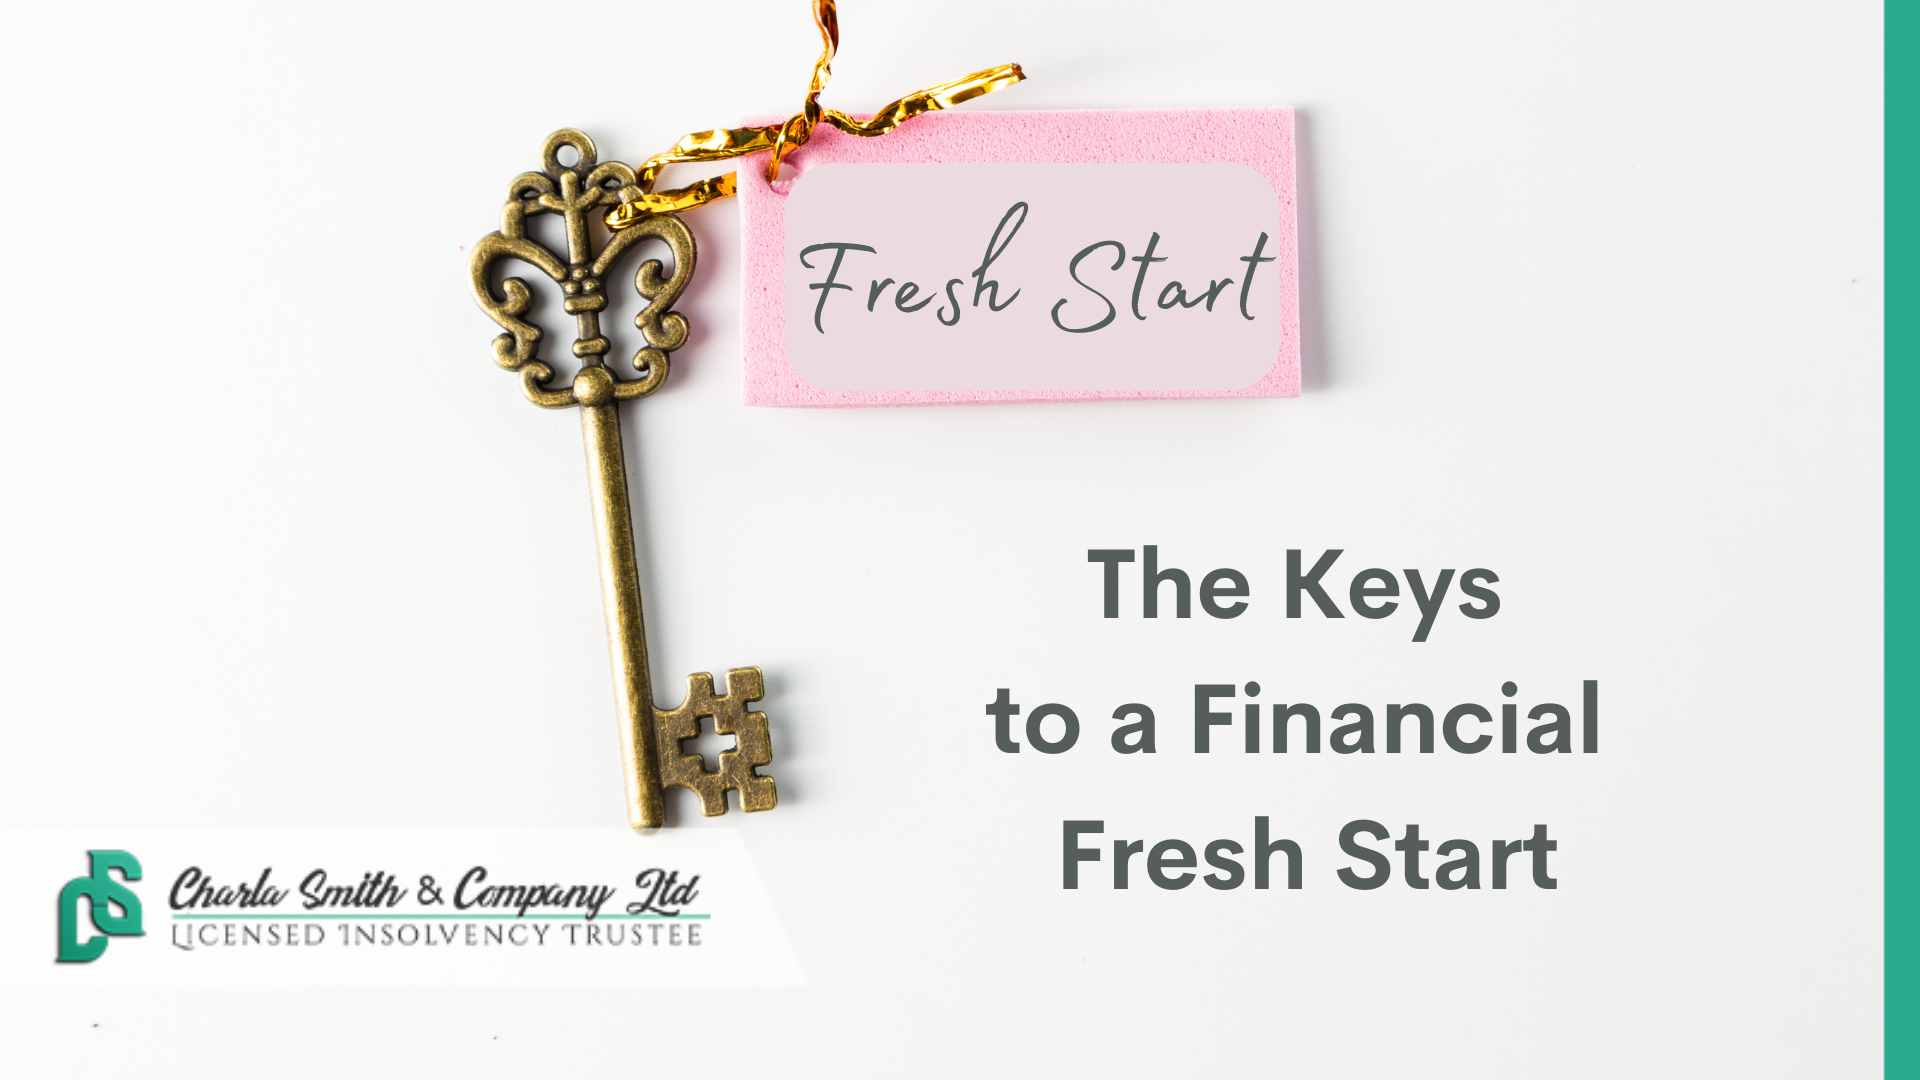 The Keys to a Financial Fresh Start